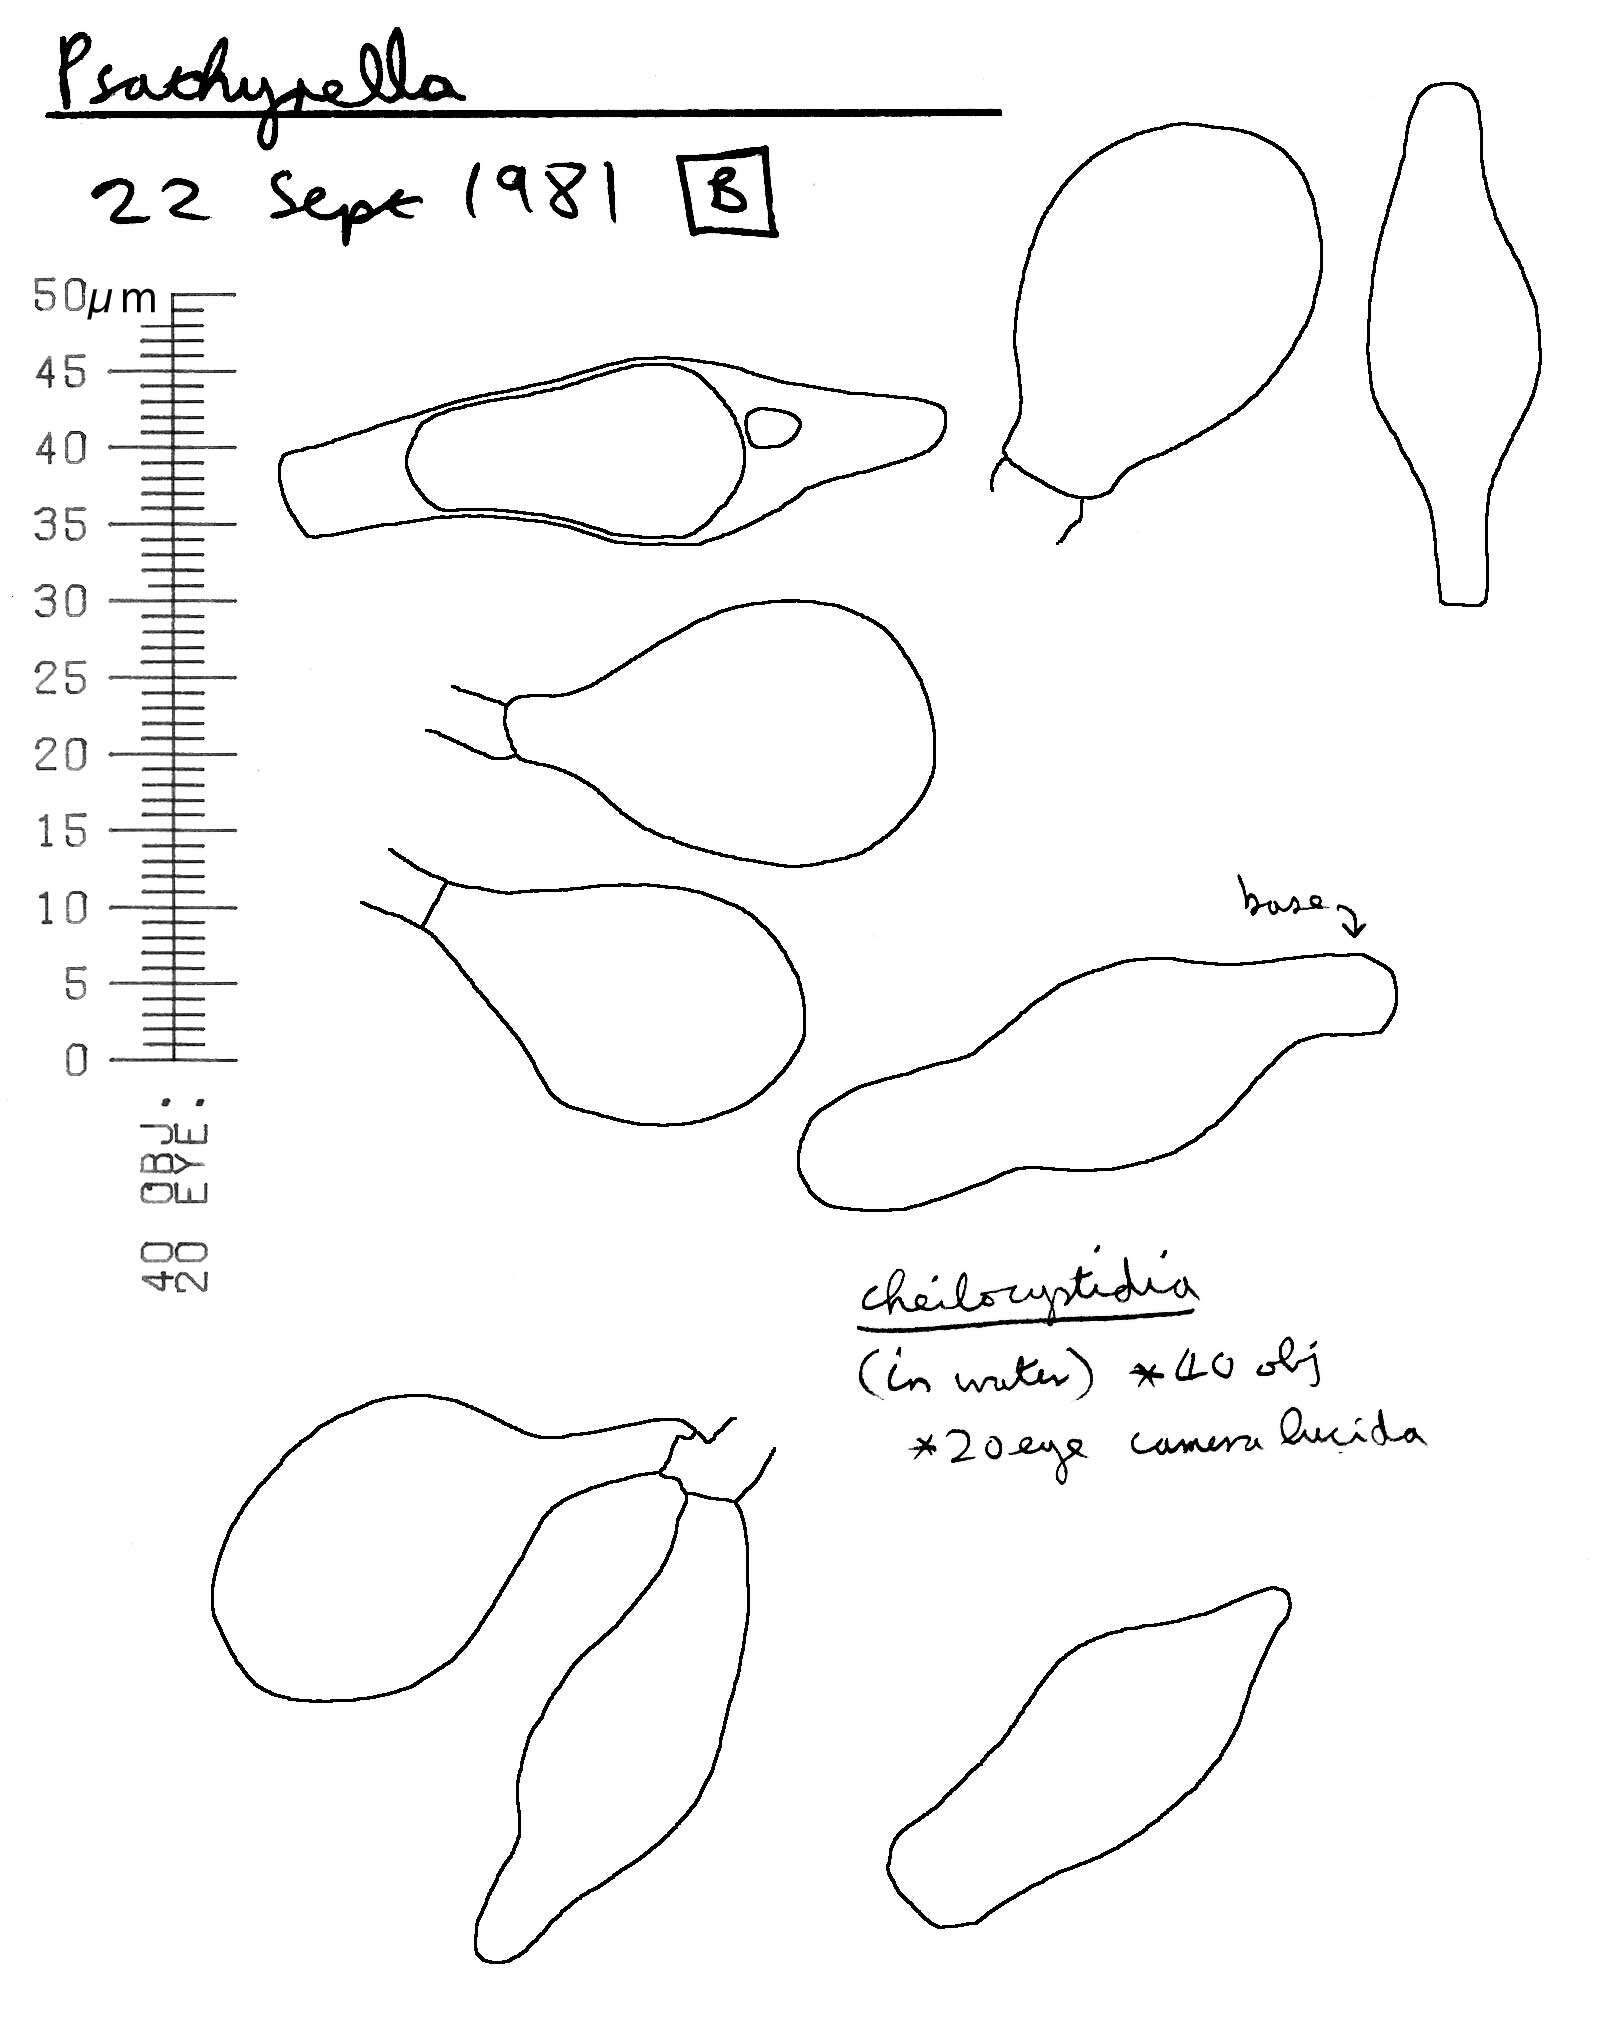 Image of Psathyrella fusca (J. E. Lange) A. Pearson 1952